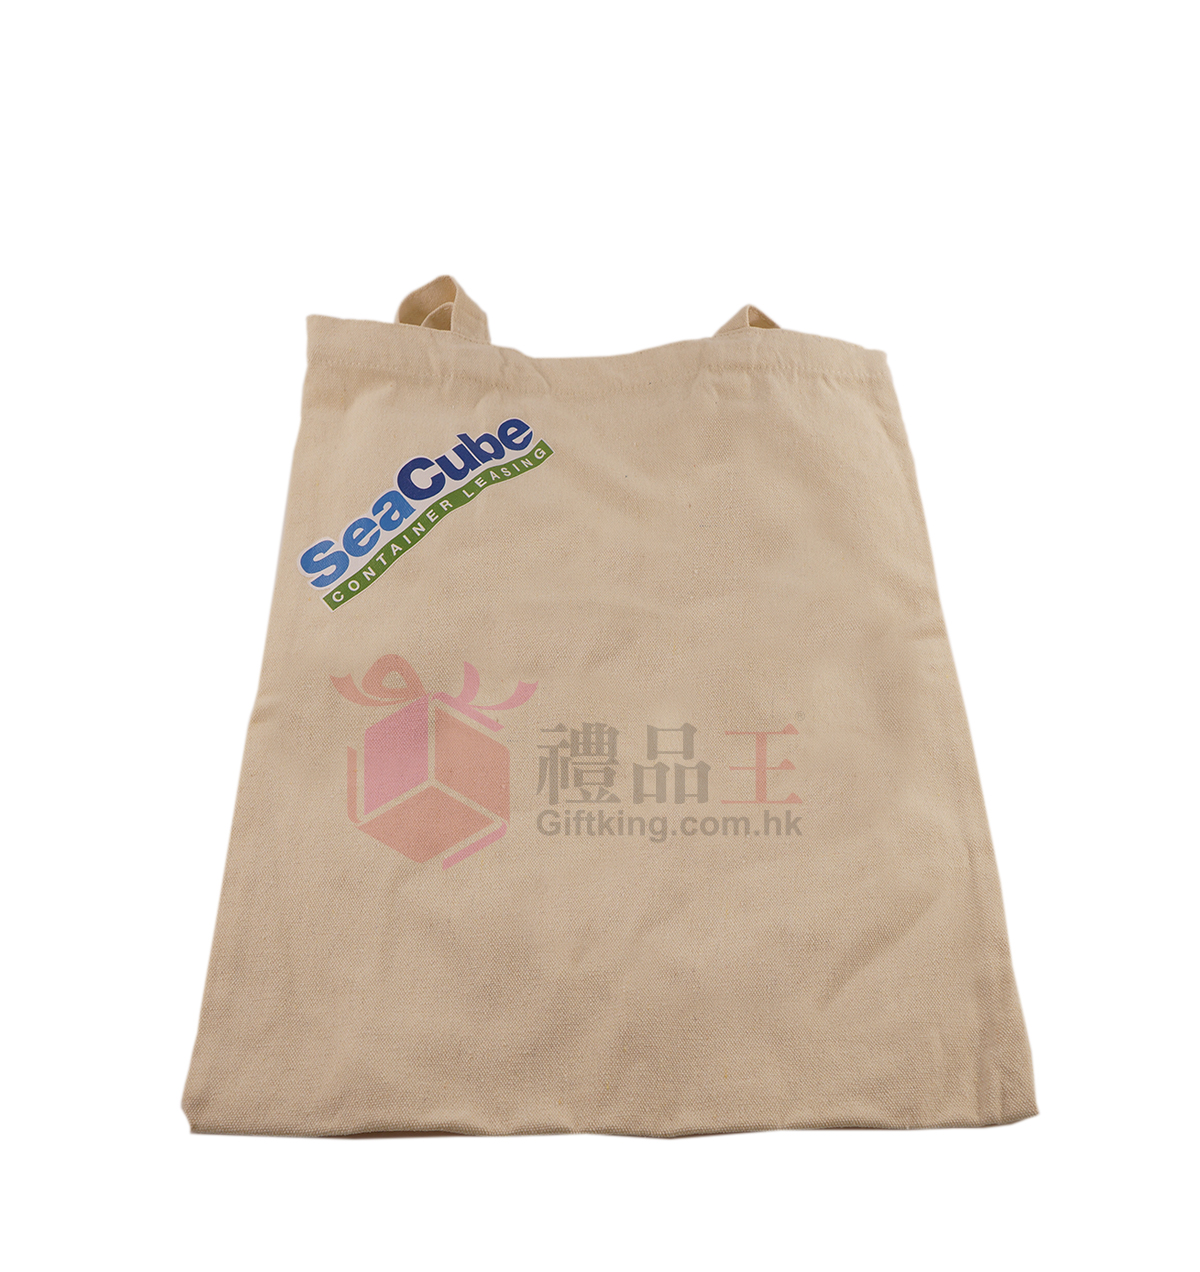 SeaCube Canvas Shopping Bag (advertising gift)